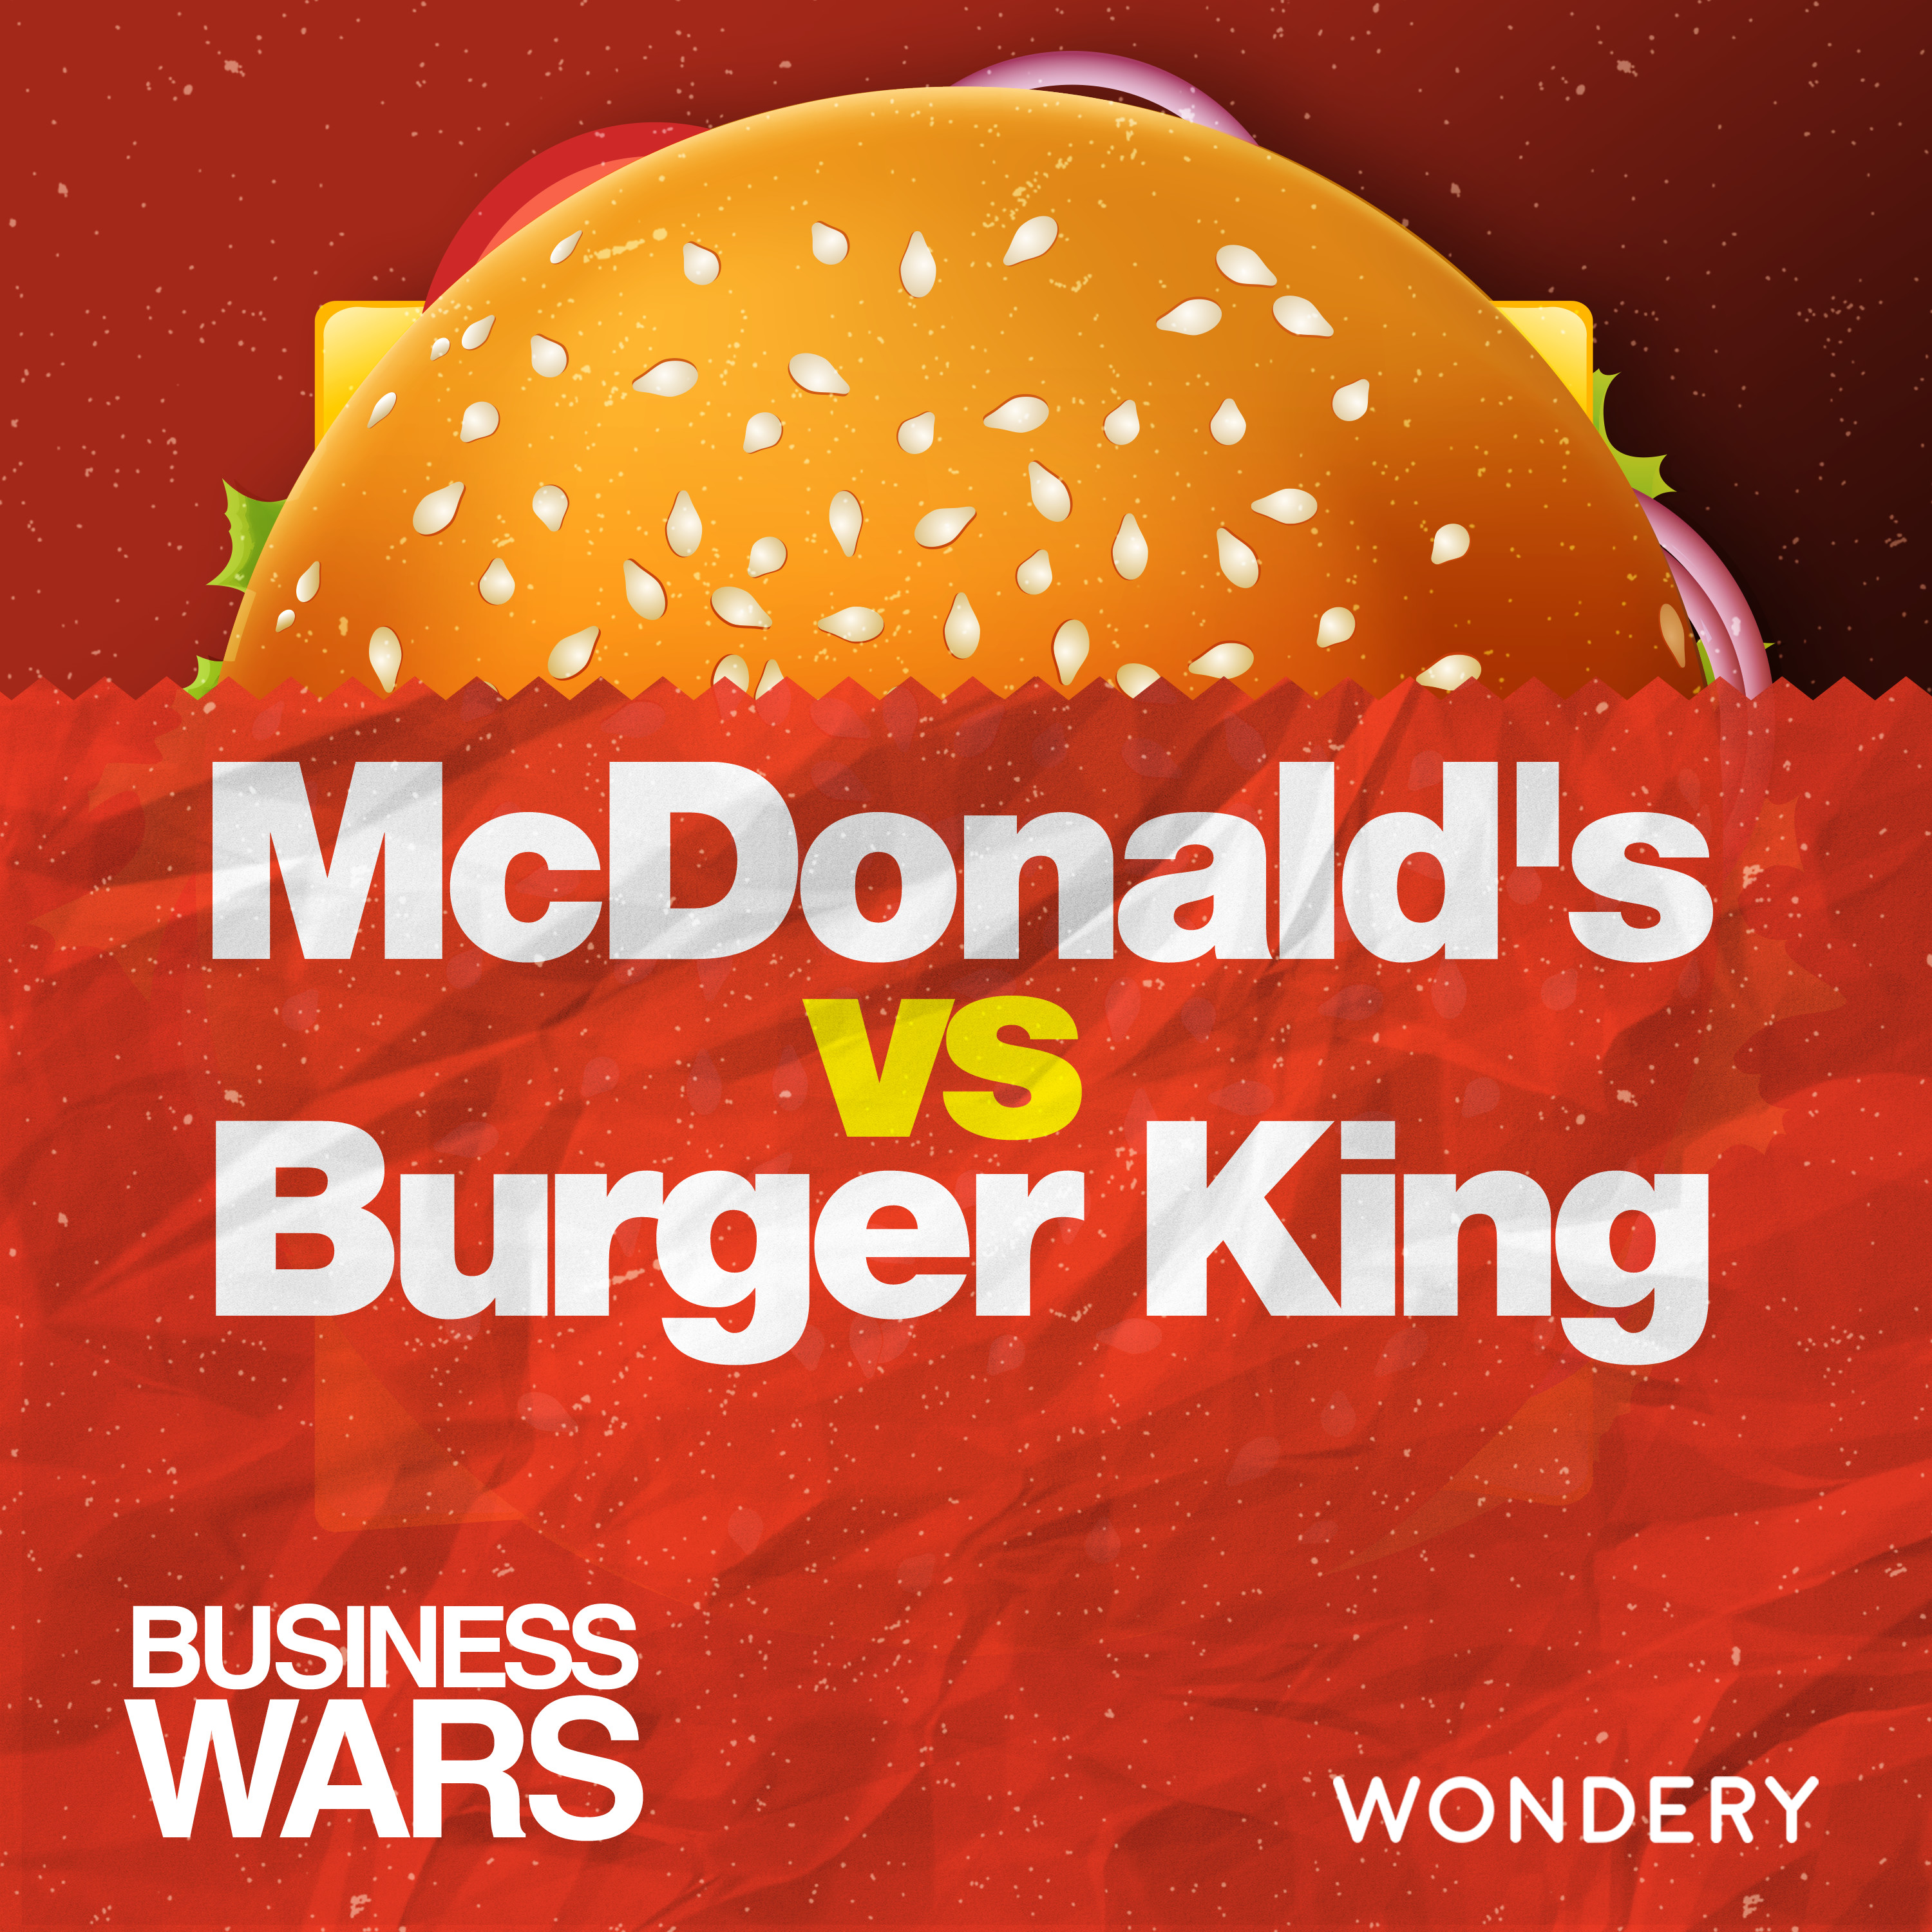 McDonald's vs Burger King - Battle of the Burgers  | 5